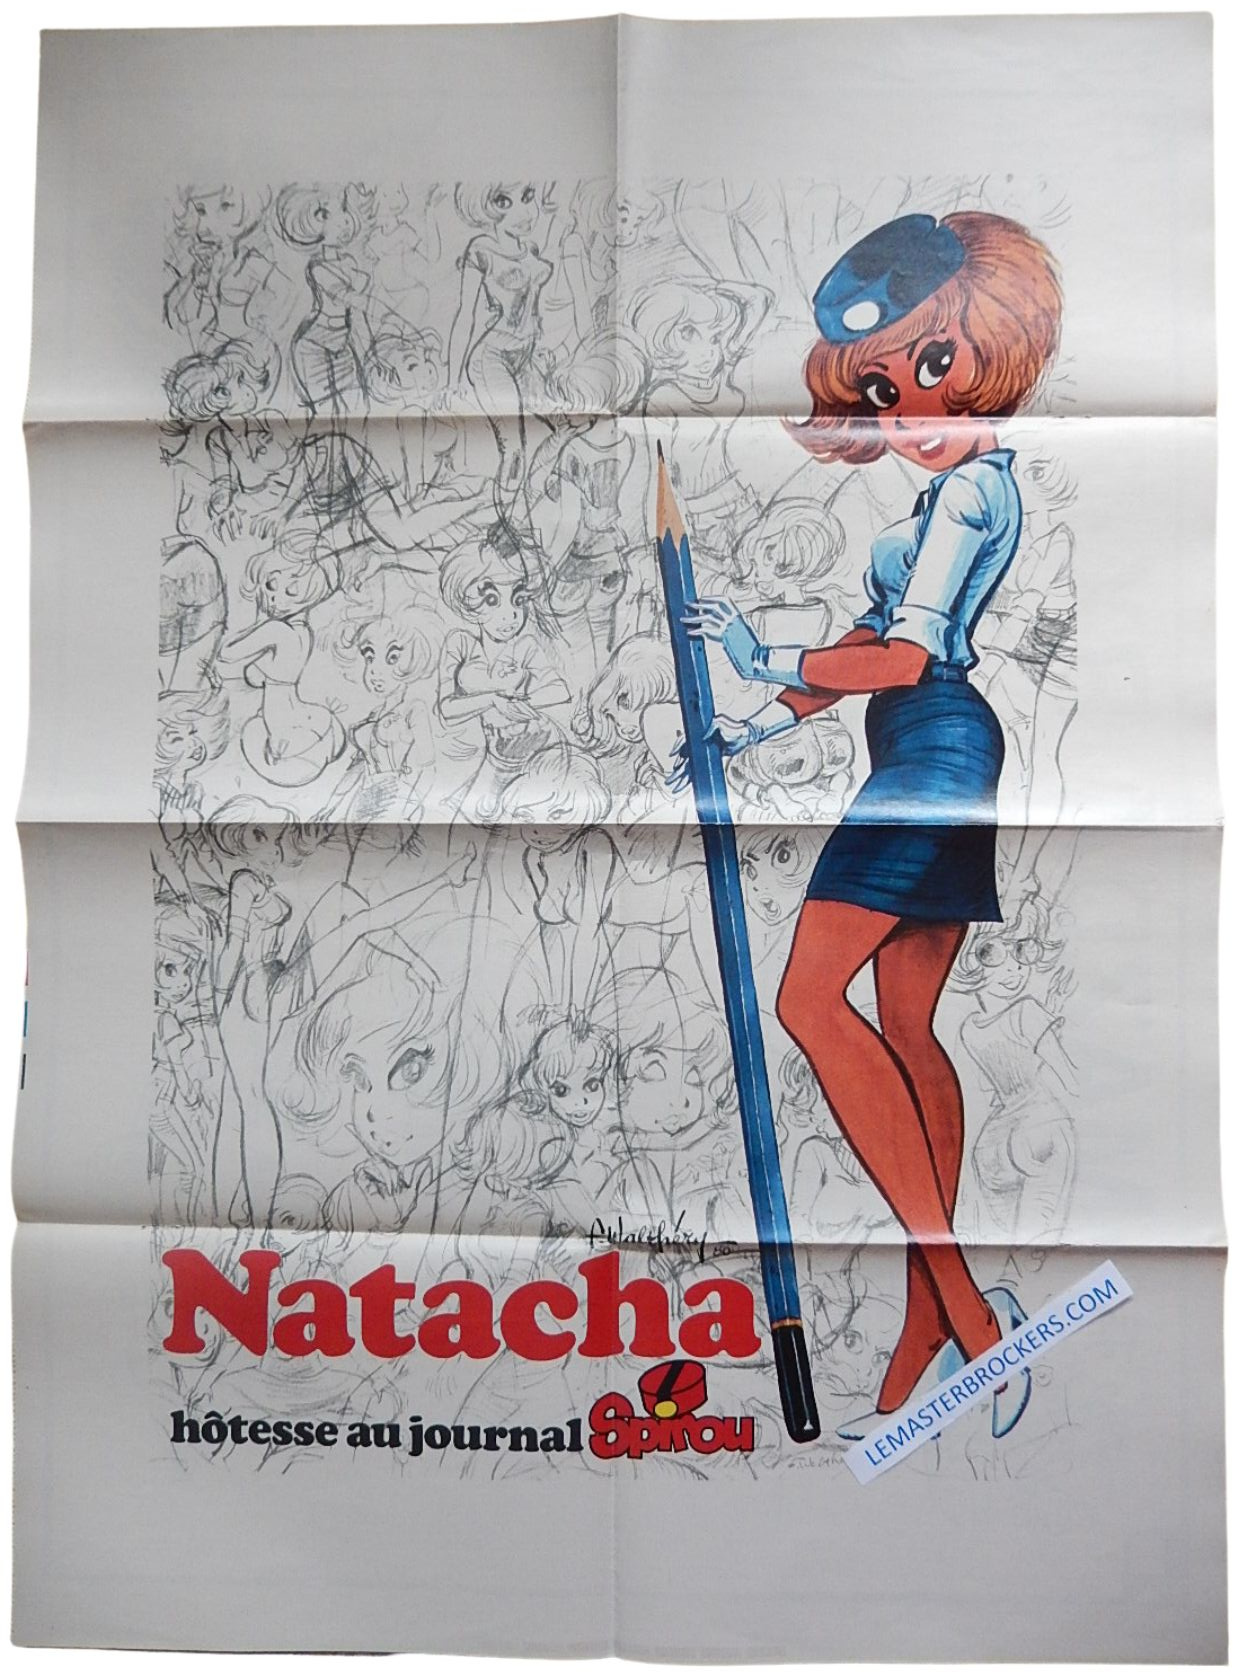 NATACHA HÔTESSE AU JOURNAL POSTER DU JOURNAL DE SPIROU 1977